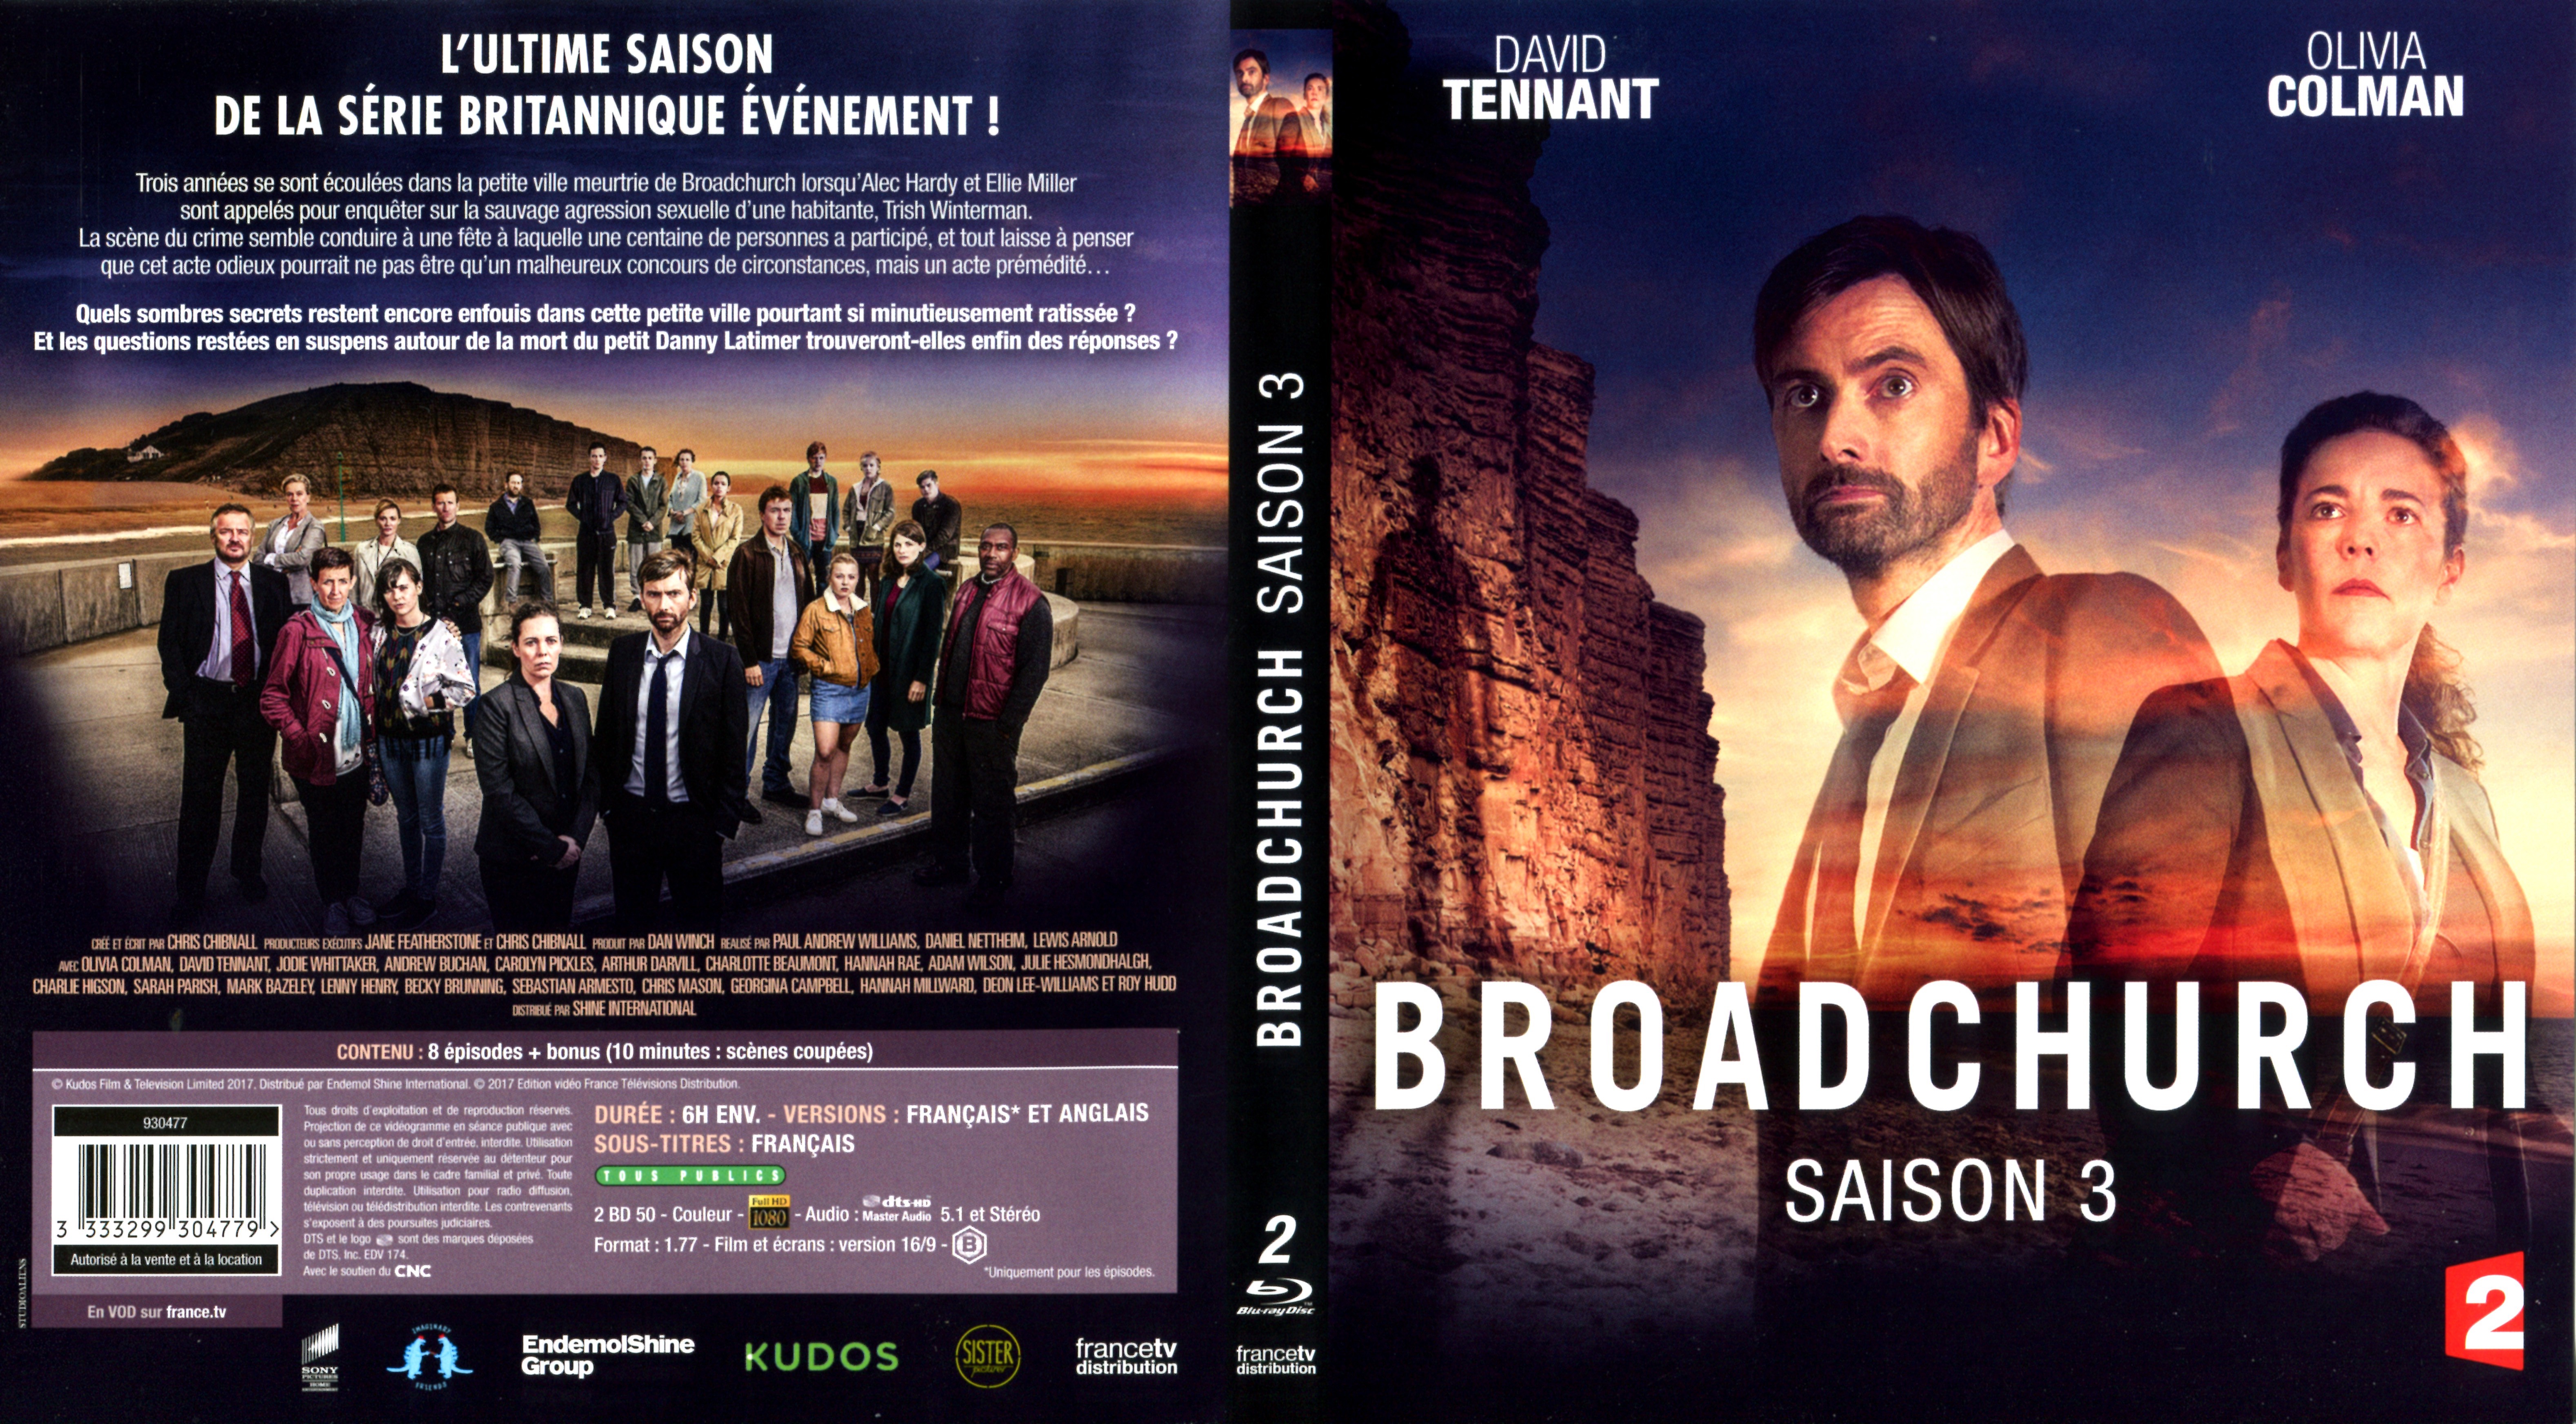 Jaquette DVD Broadchurch Saison 3 (BLU-RAY)